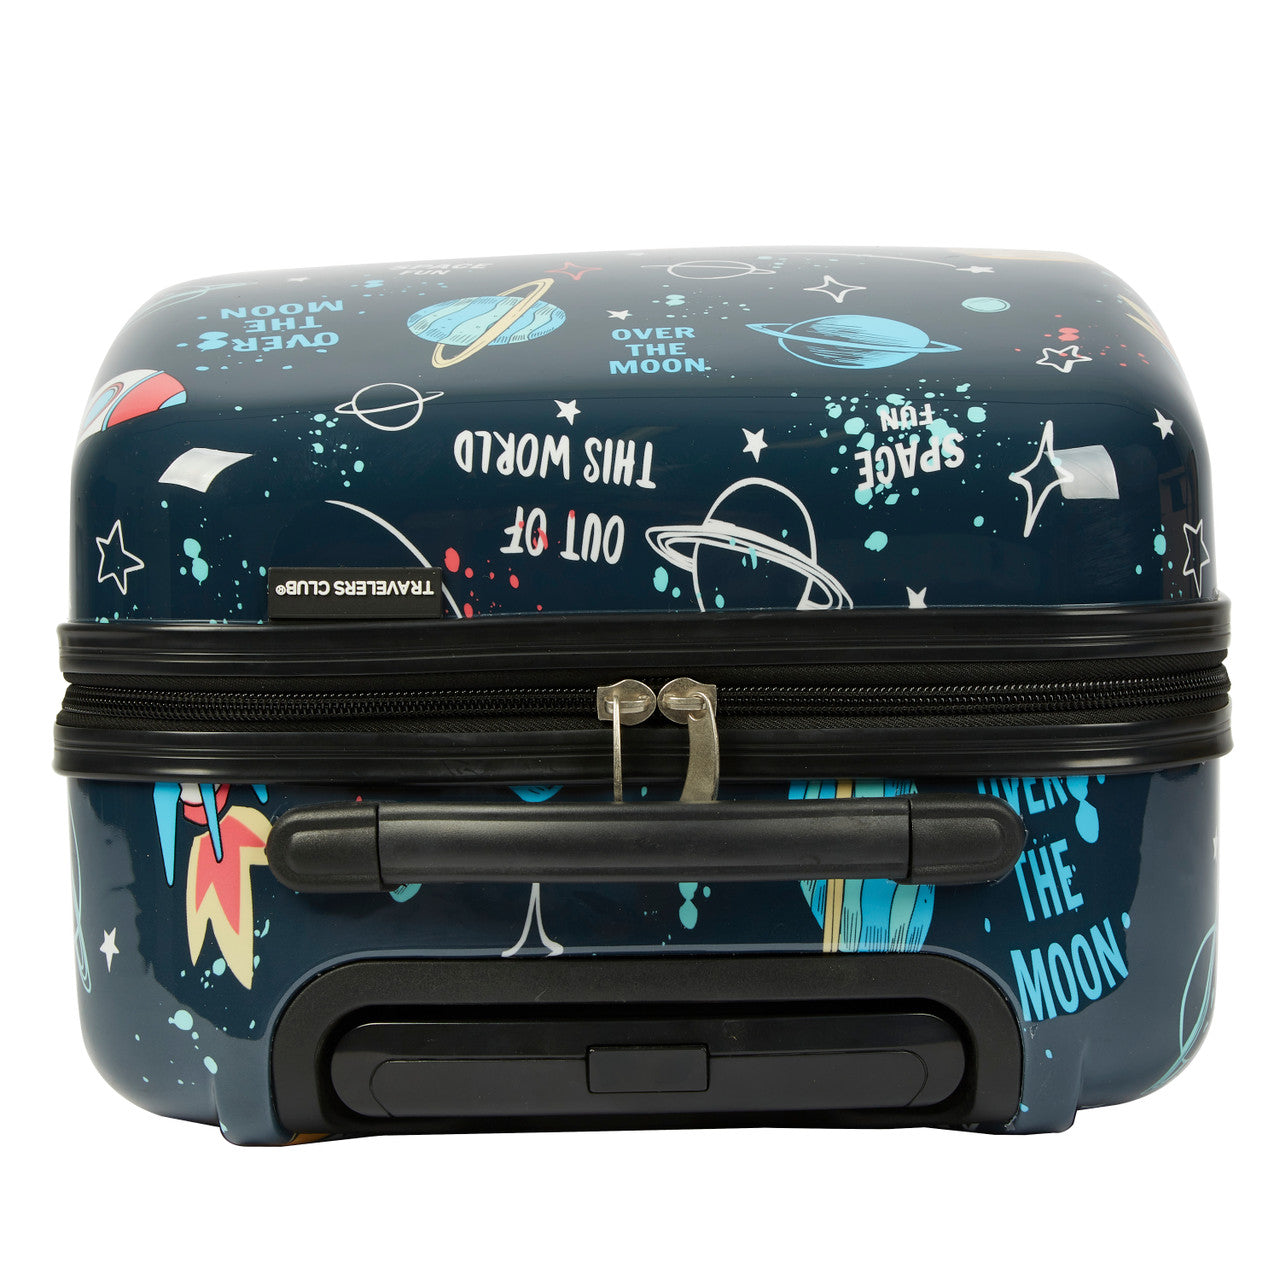 3pc Kids Luggage Set – Travelers Club Luggage